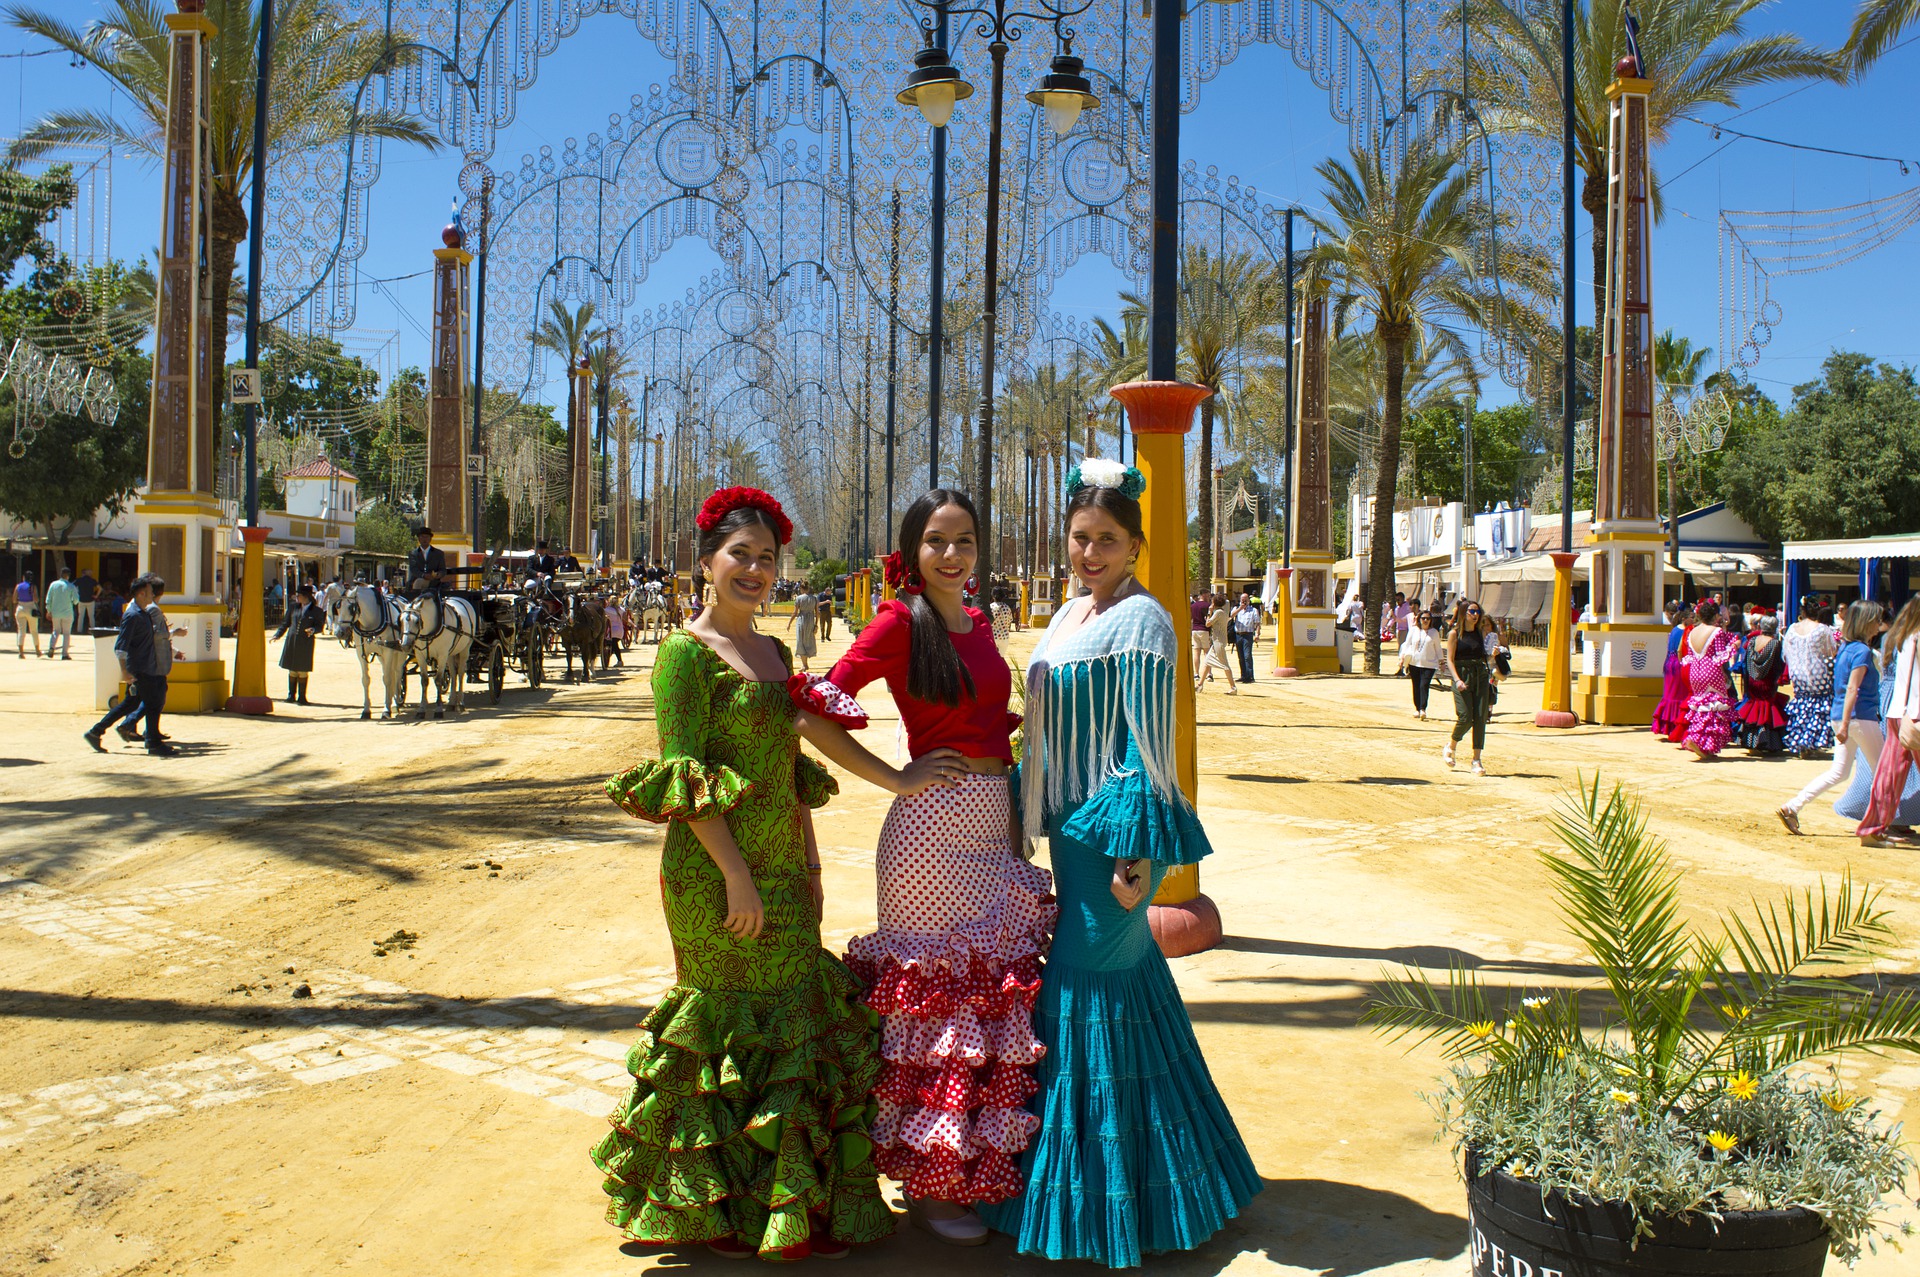 May Festival in Spain